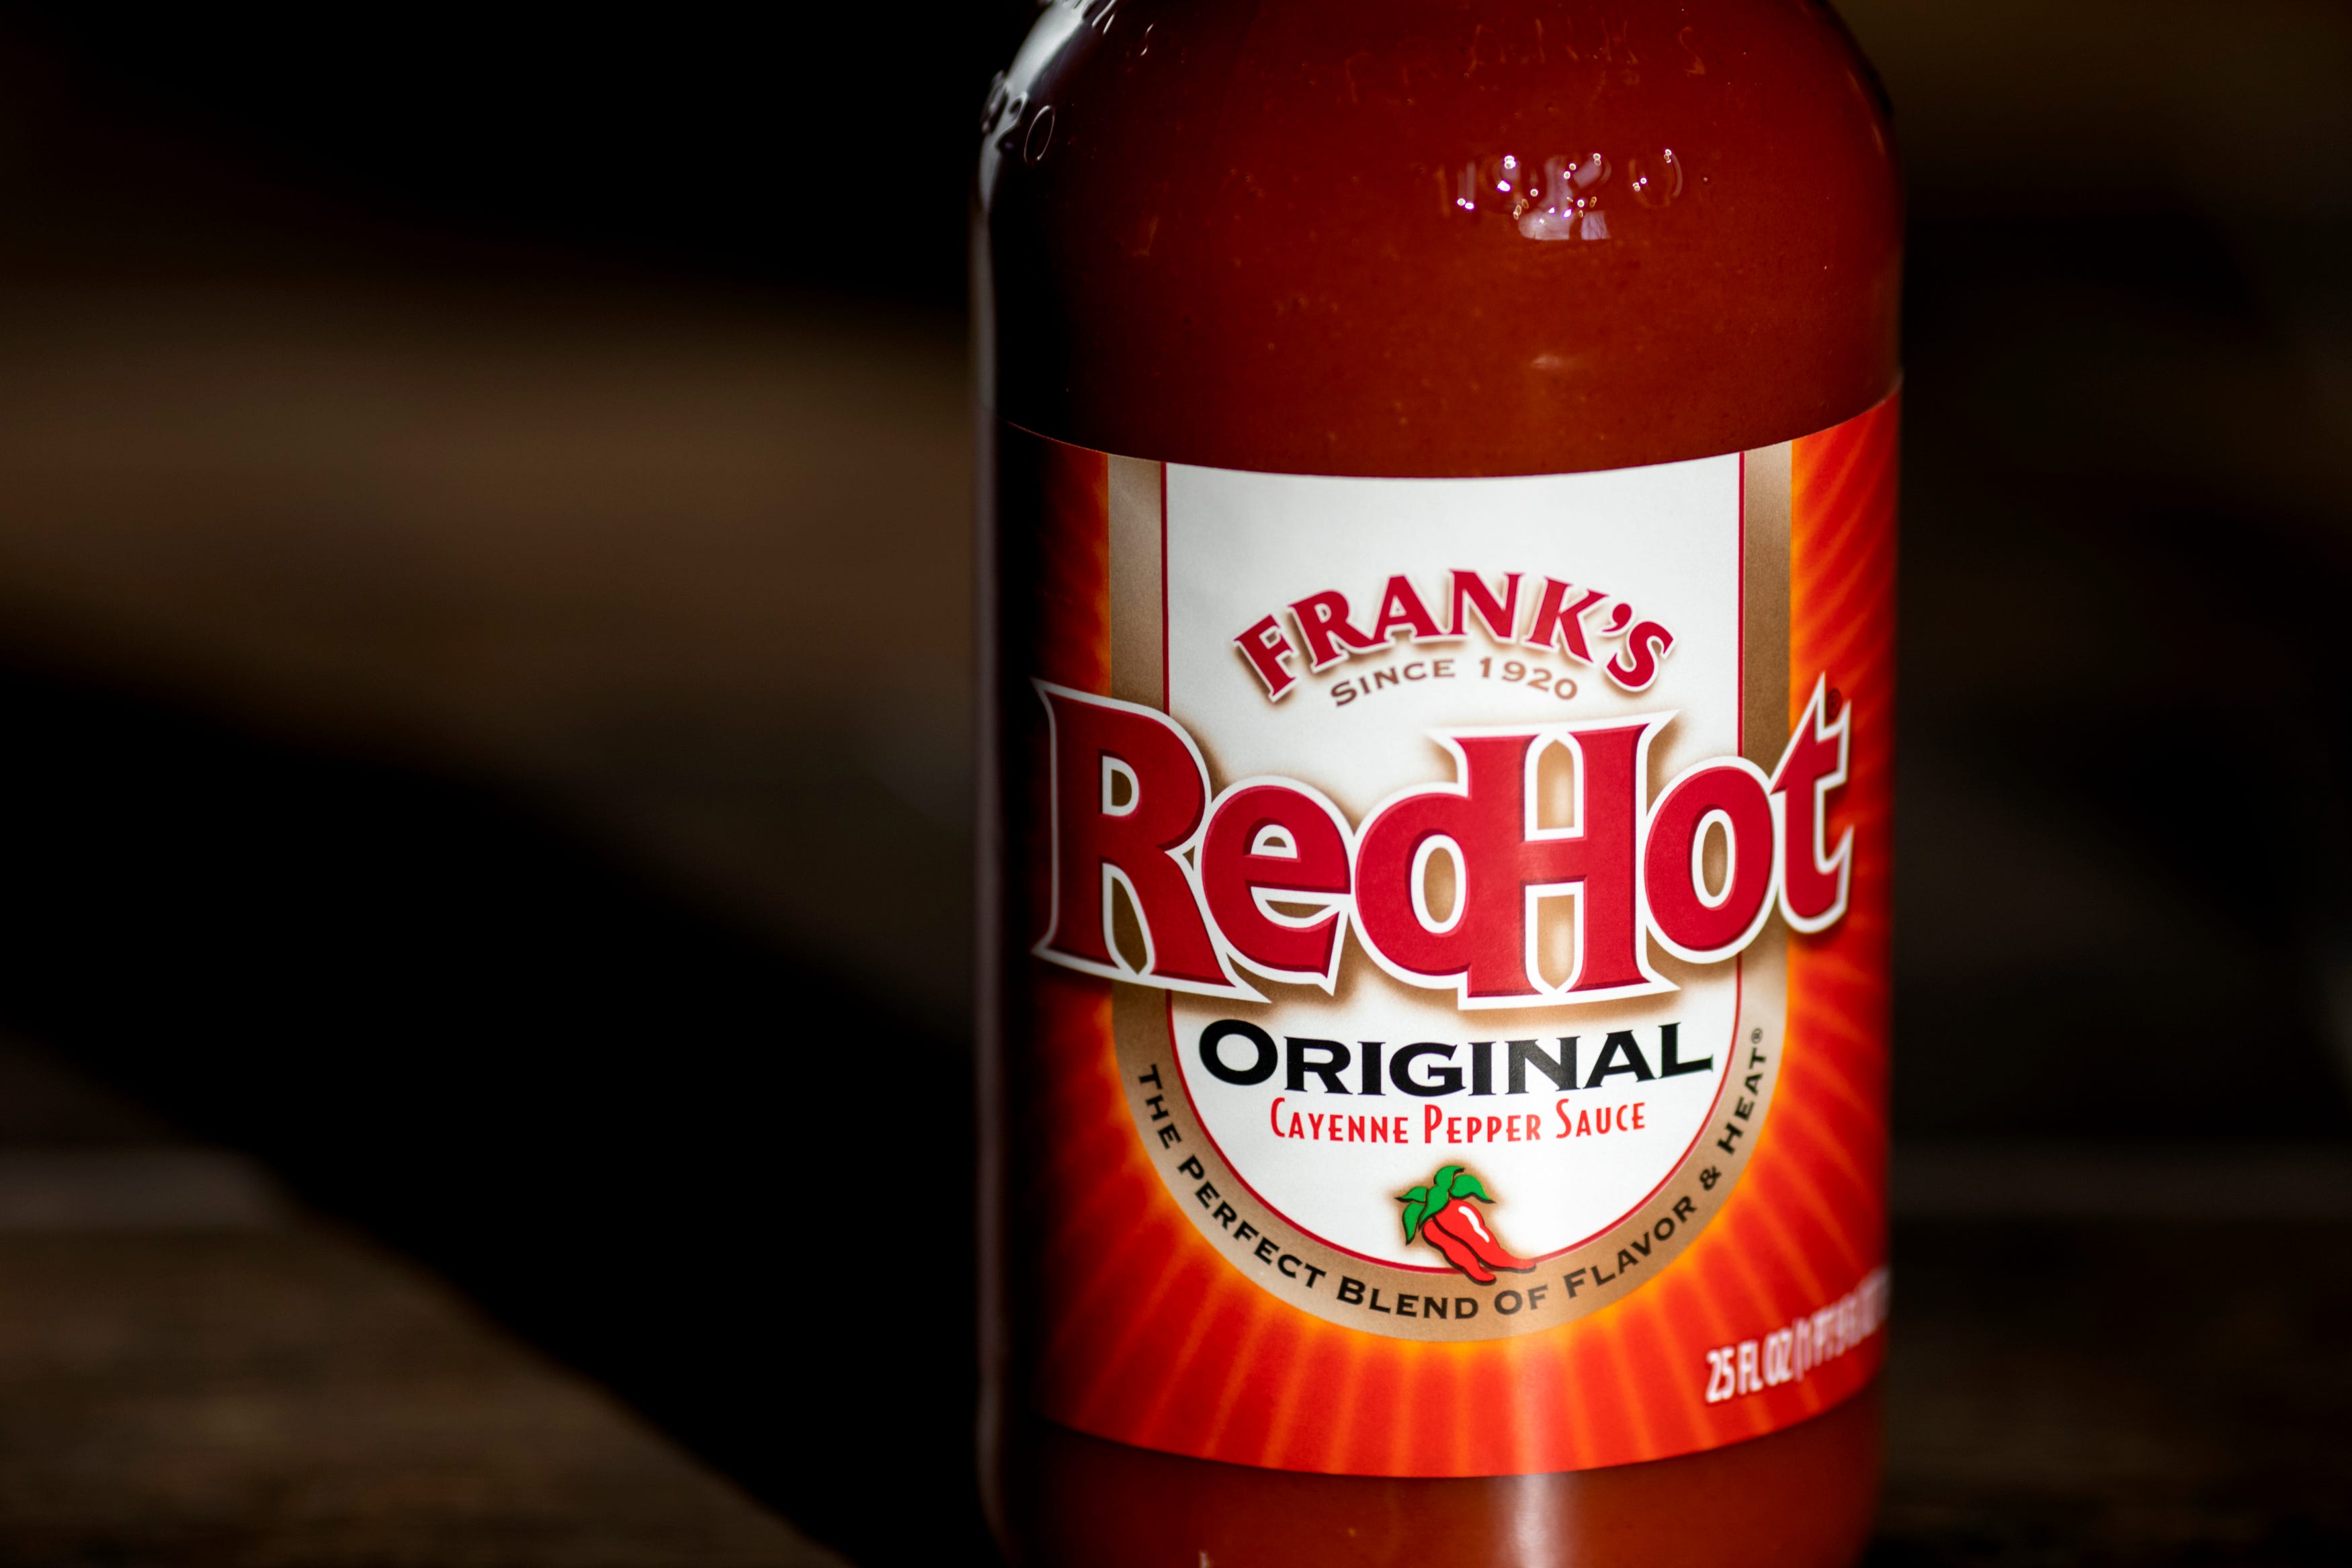 Frank's Hot Sauce was founded Cincinnati in 1920